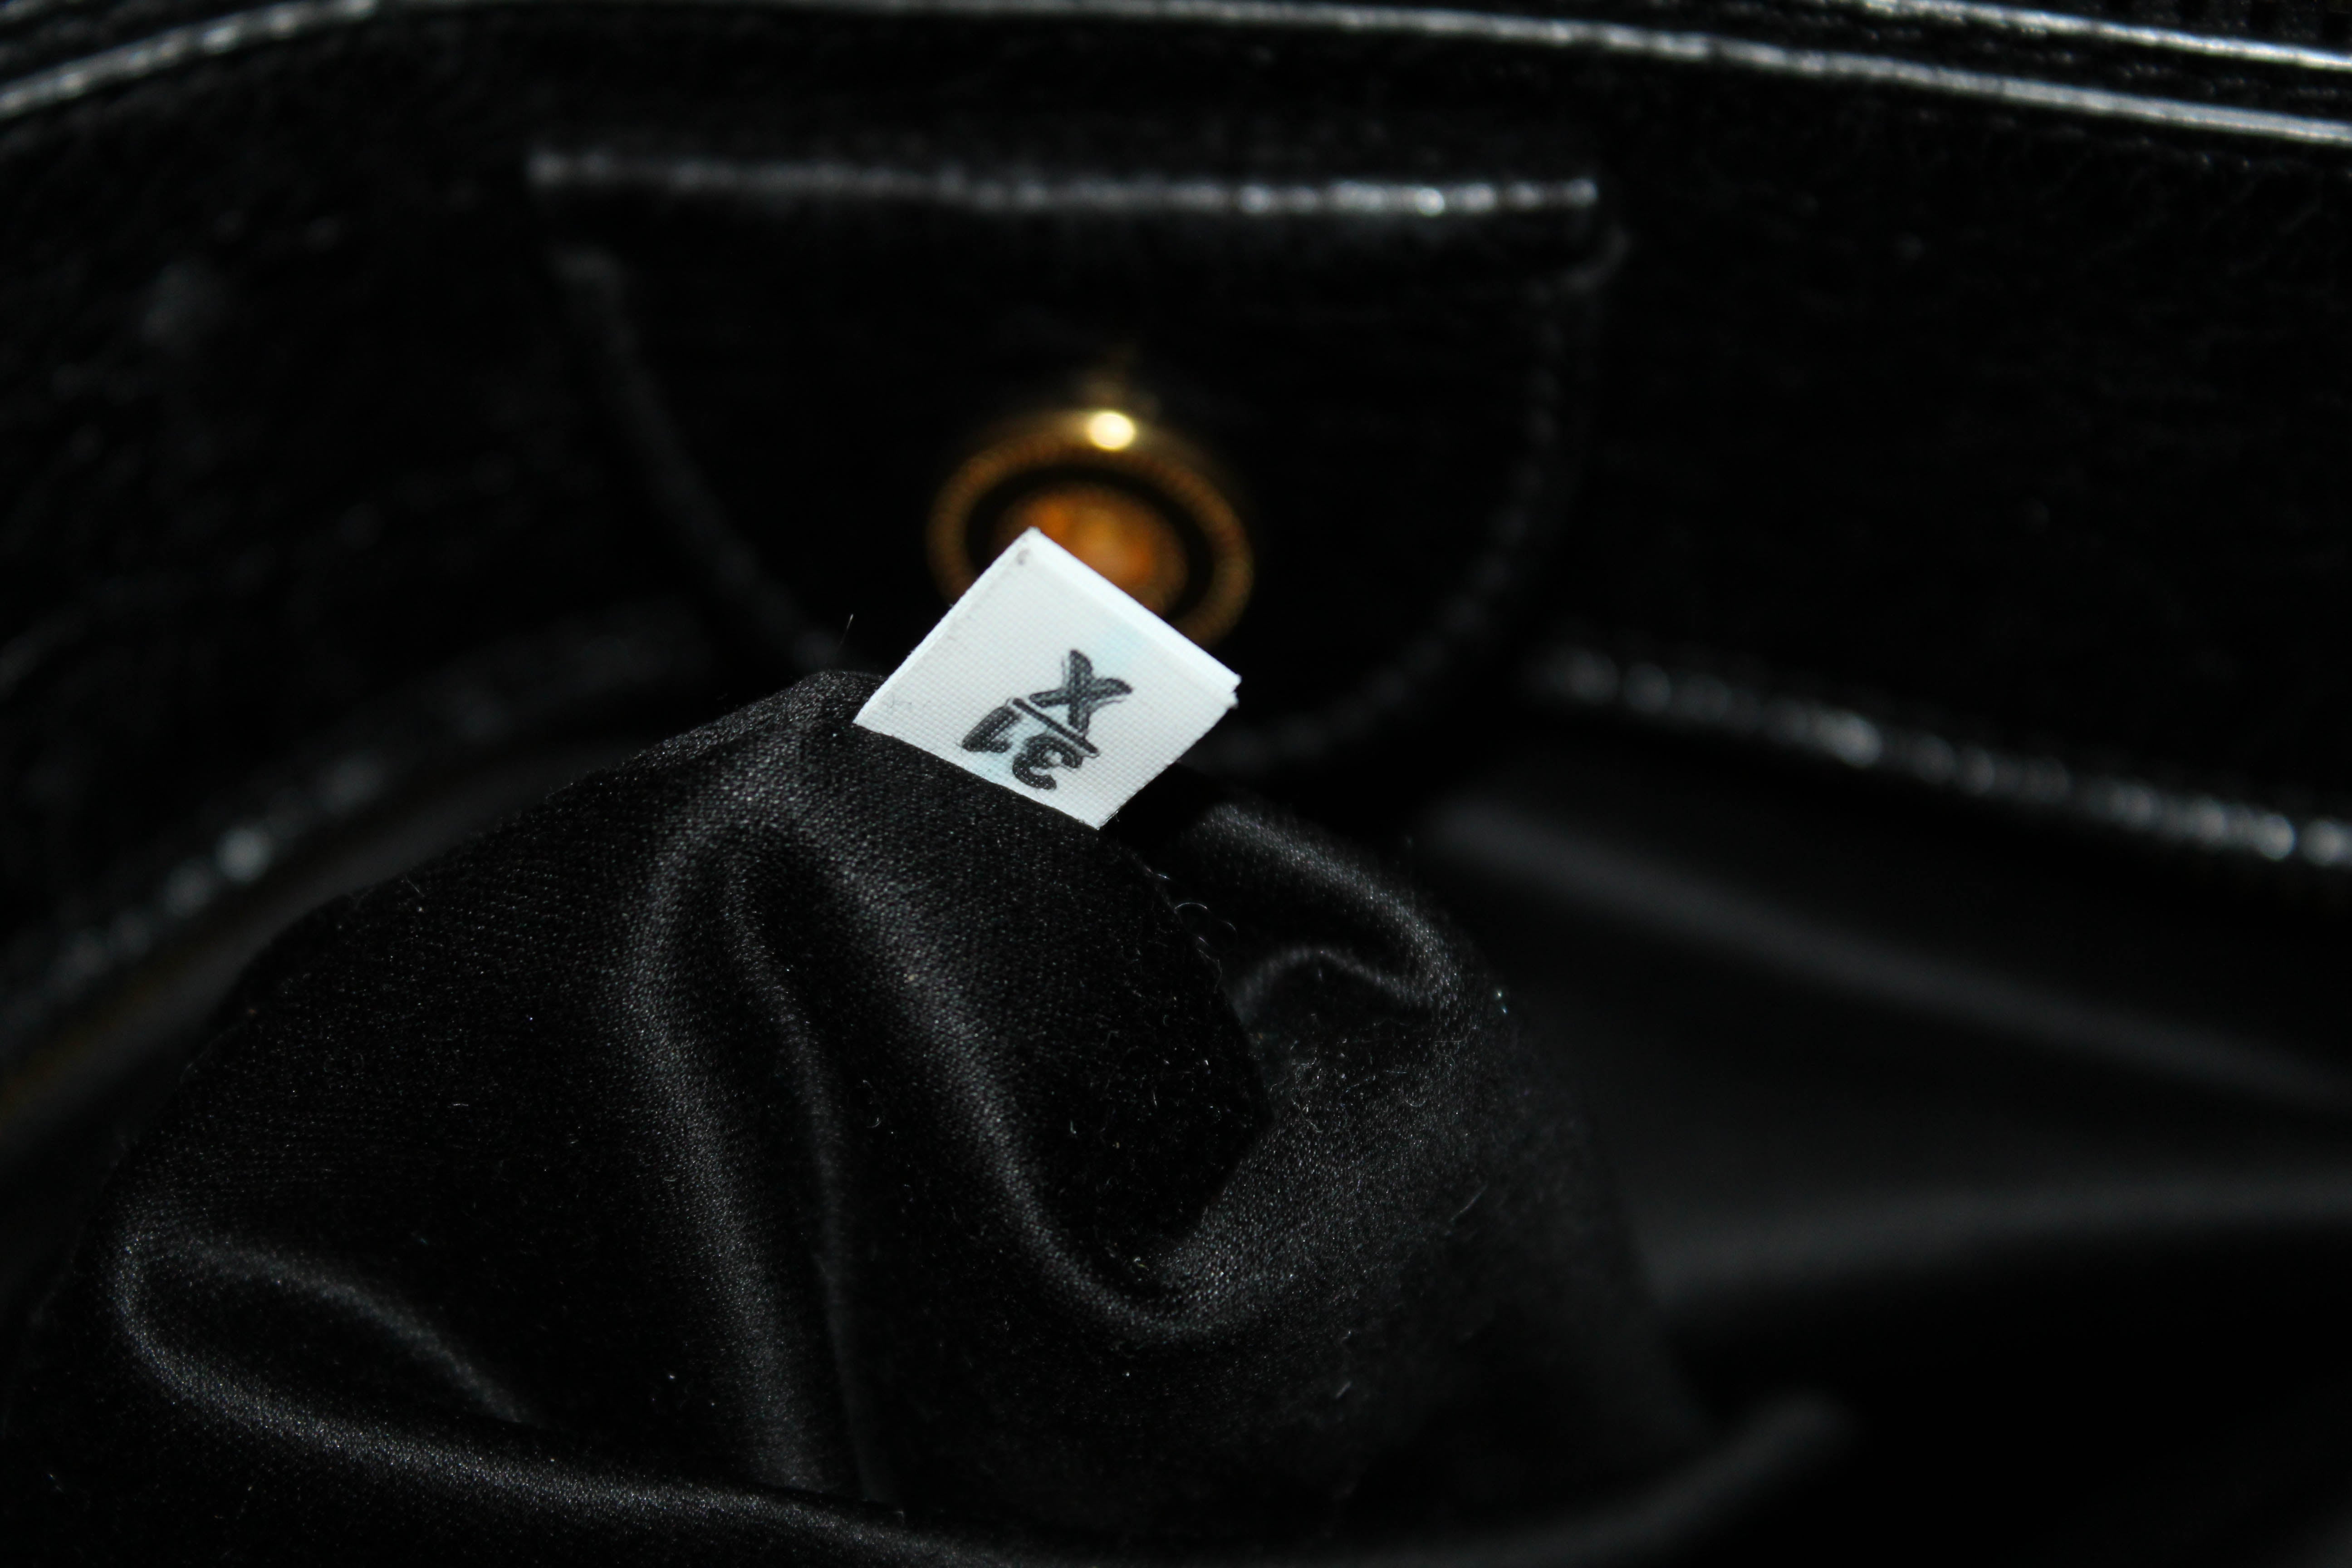 Authentic Miu Miu Black Vitello Shine Leather Hand/Shoulder Bag